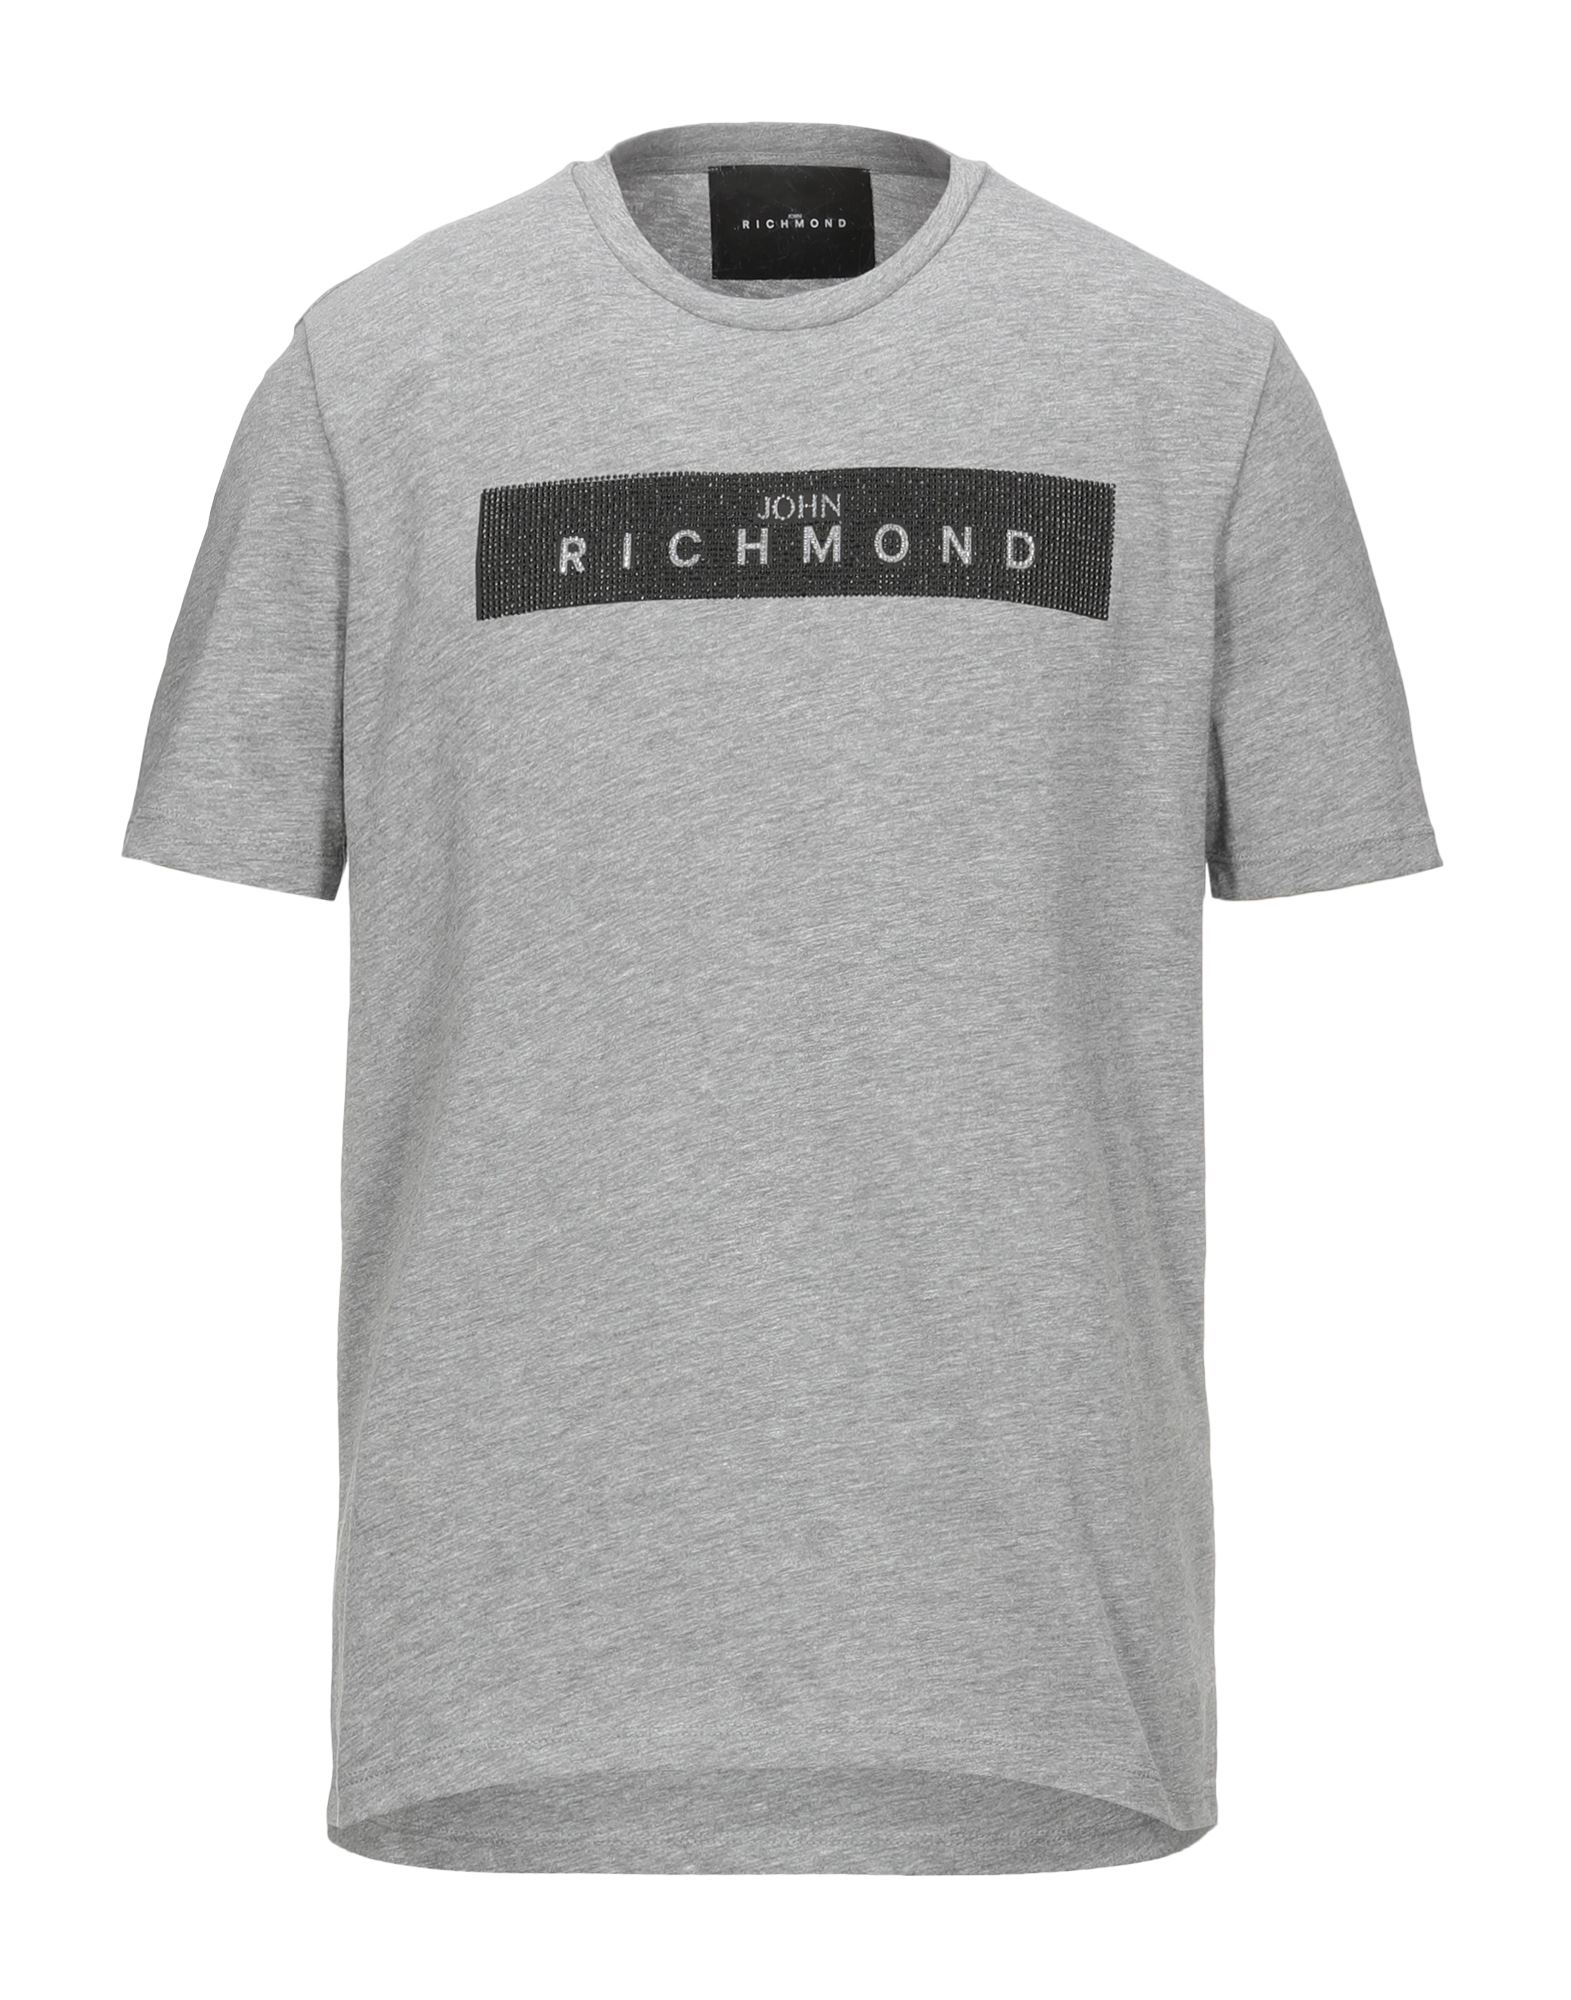 JOHN RICHMOND T-shirts - Item 12315208